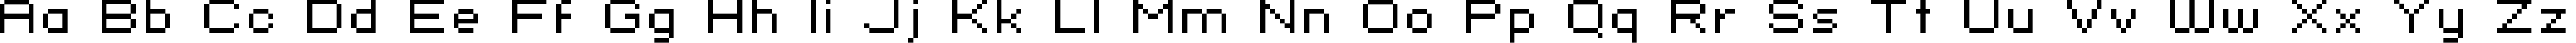 Пример написания английского алфавита шрифтом standard 07_52